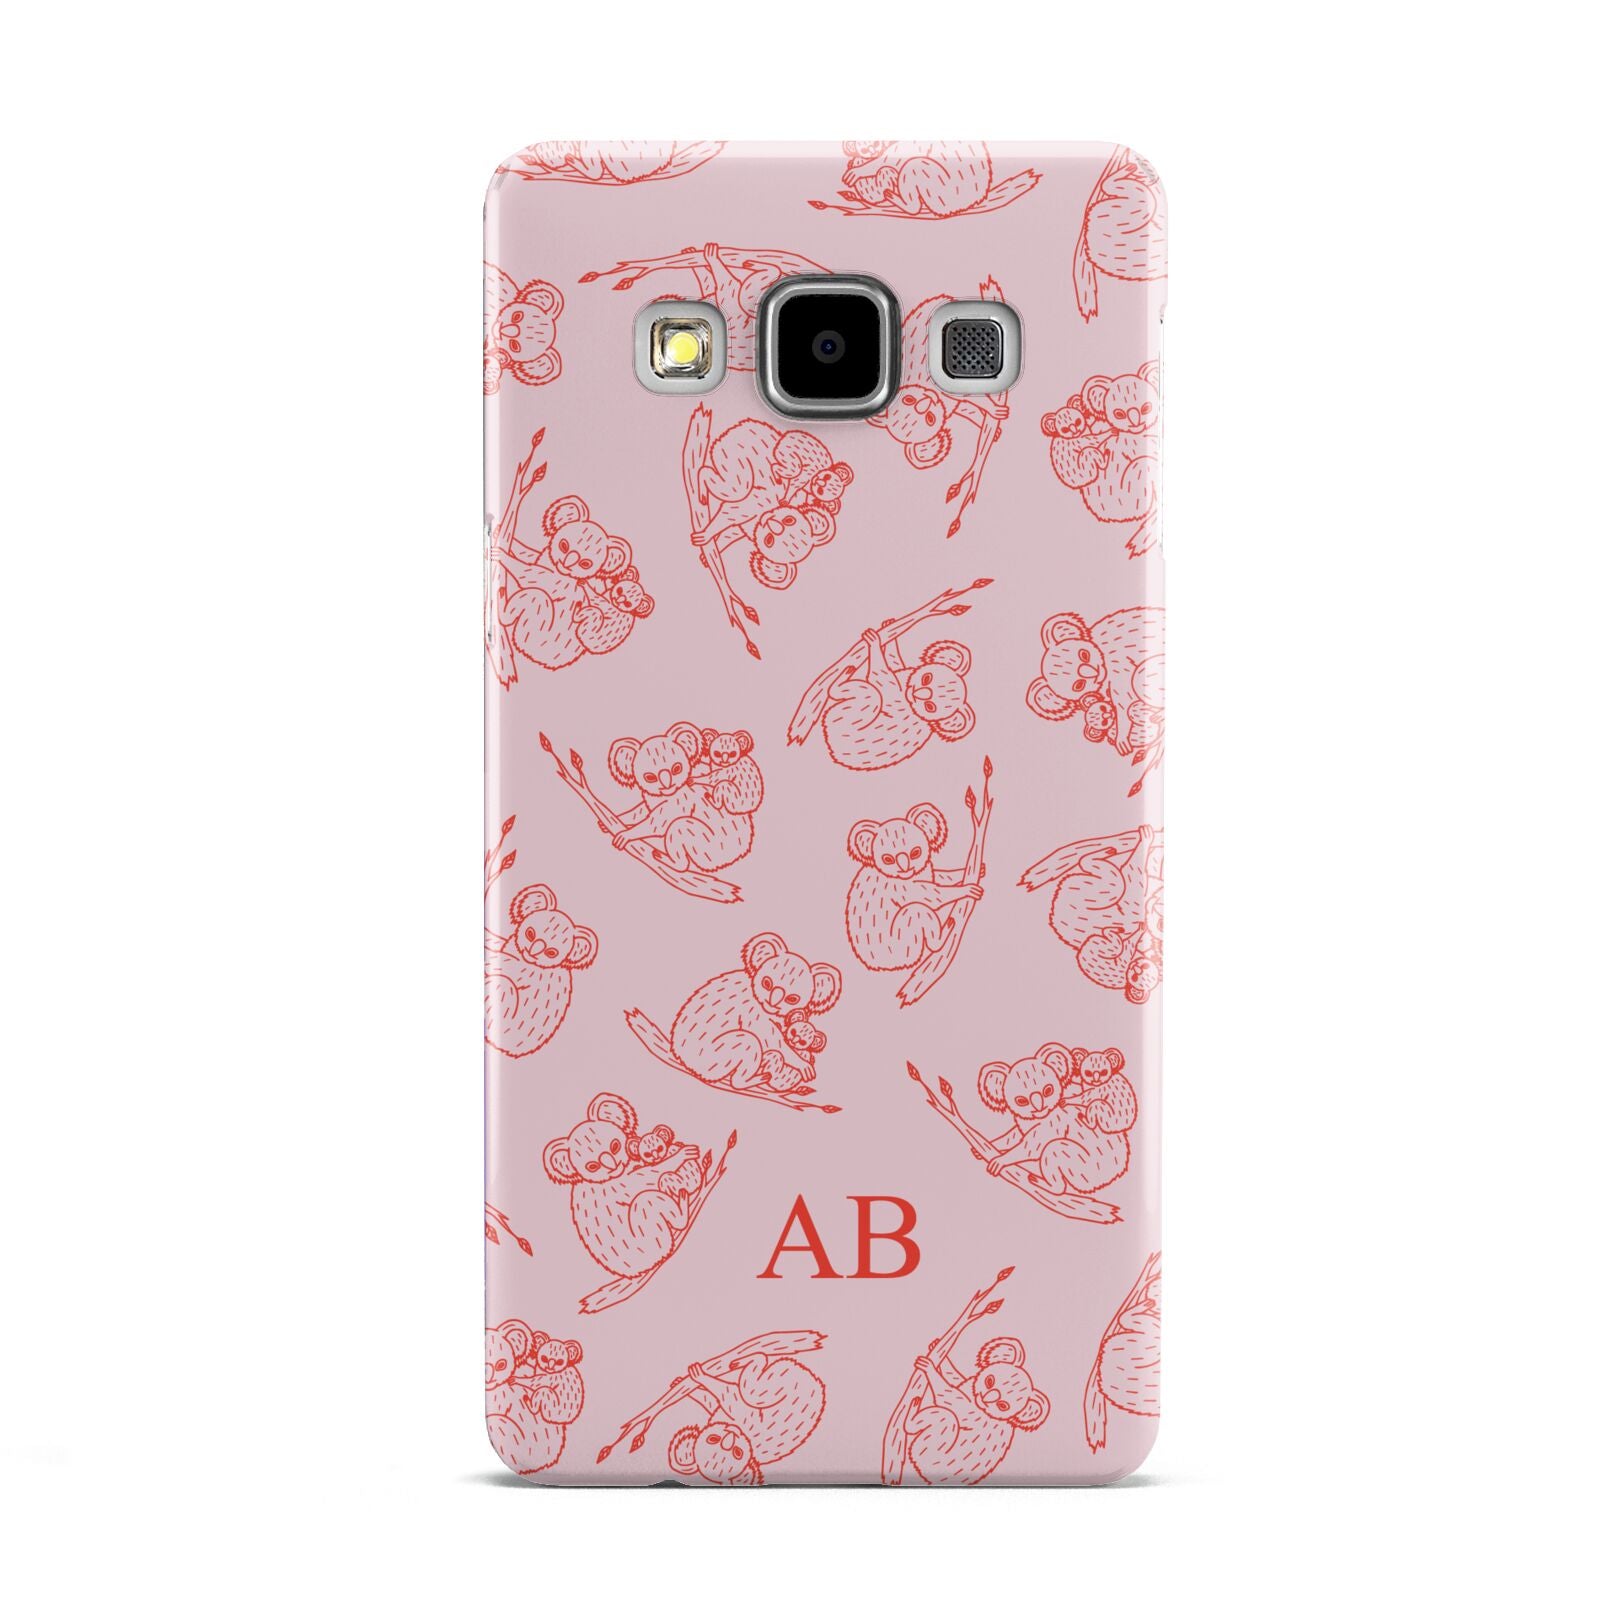 Personalised Koala Samsung Galaxy A5 Case